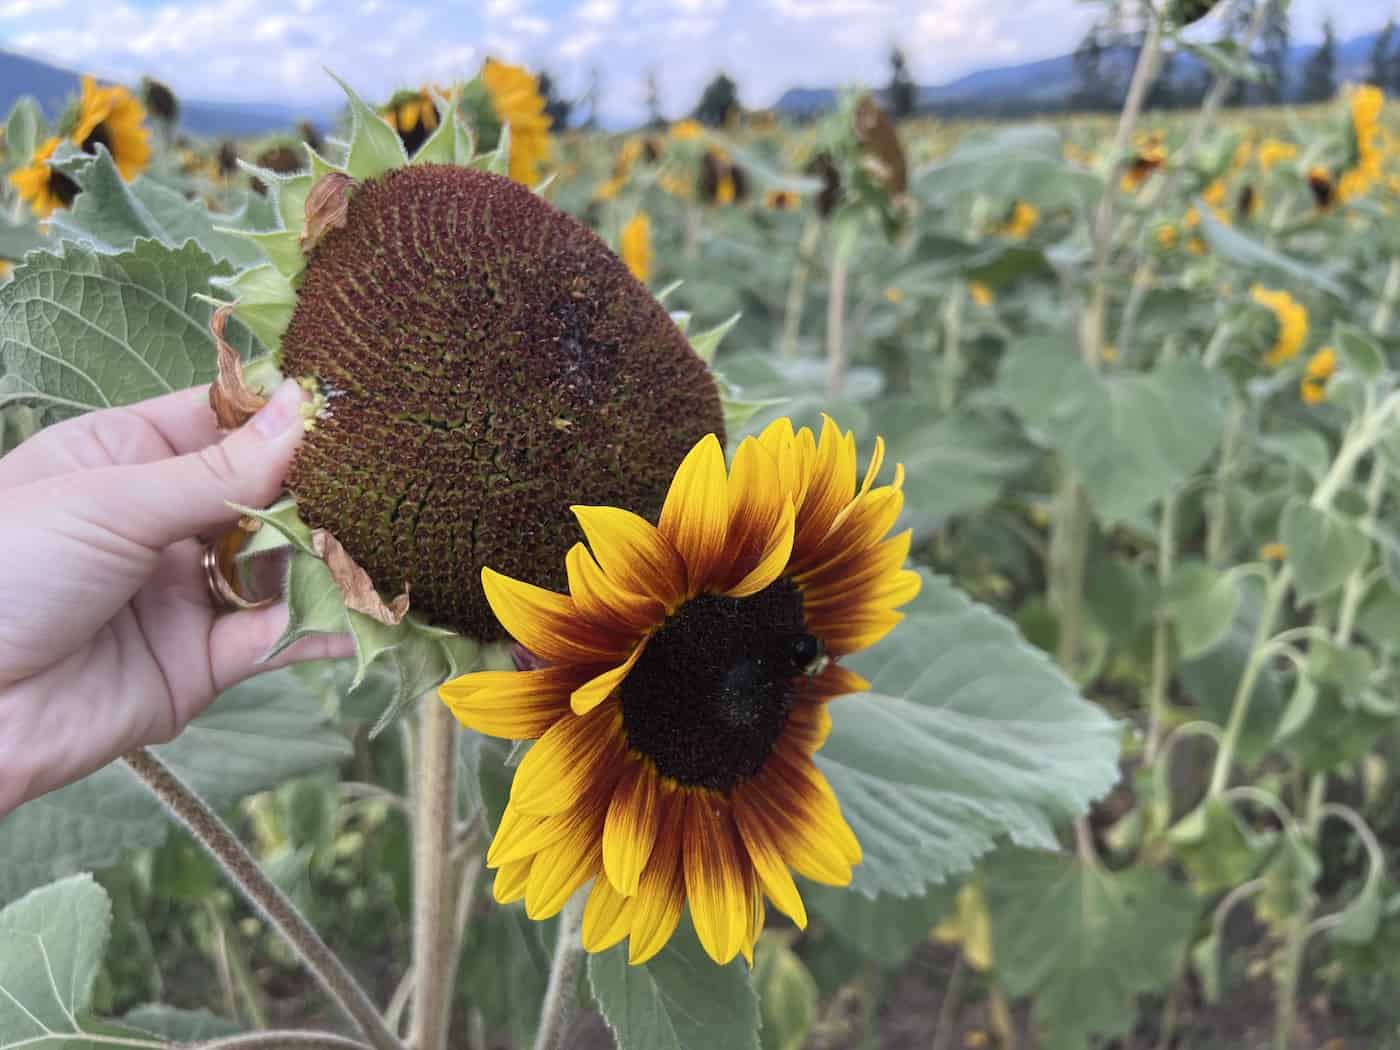 Sunflower seeds in head drying on stalk in field